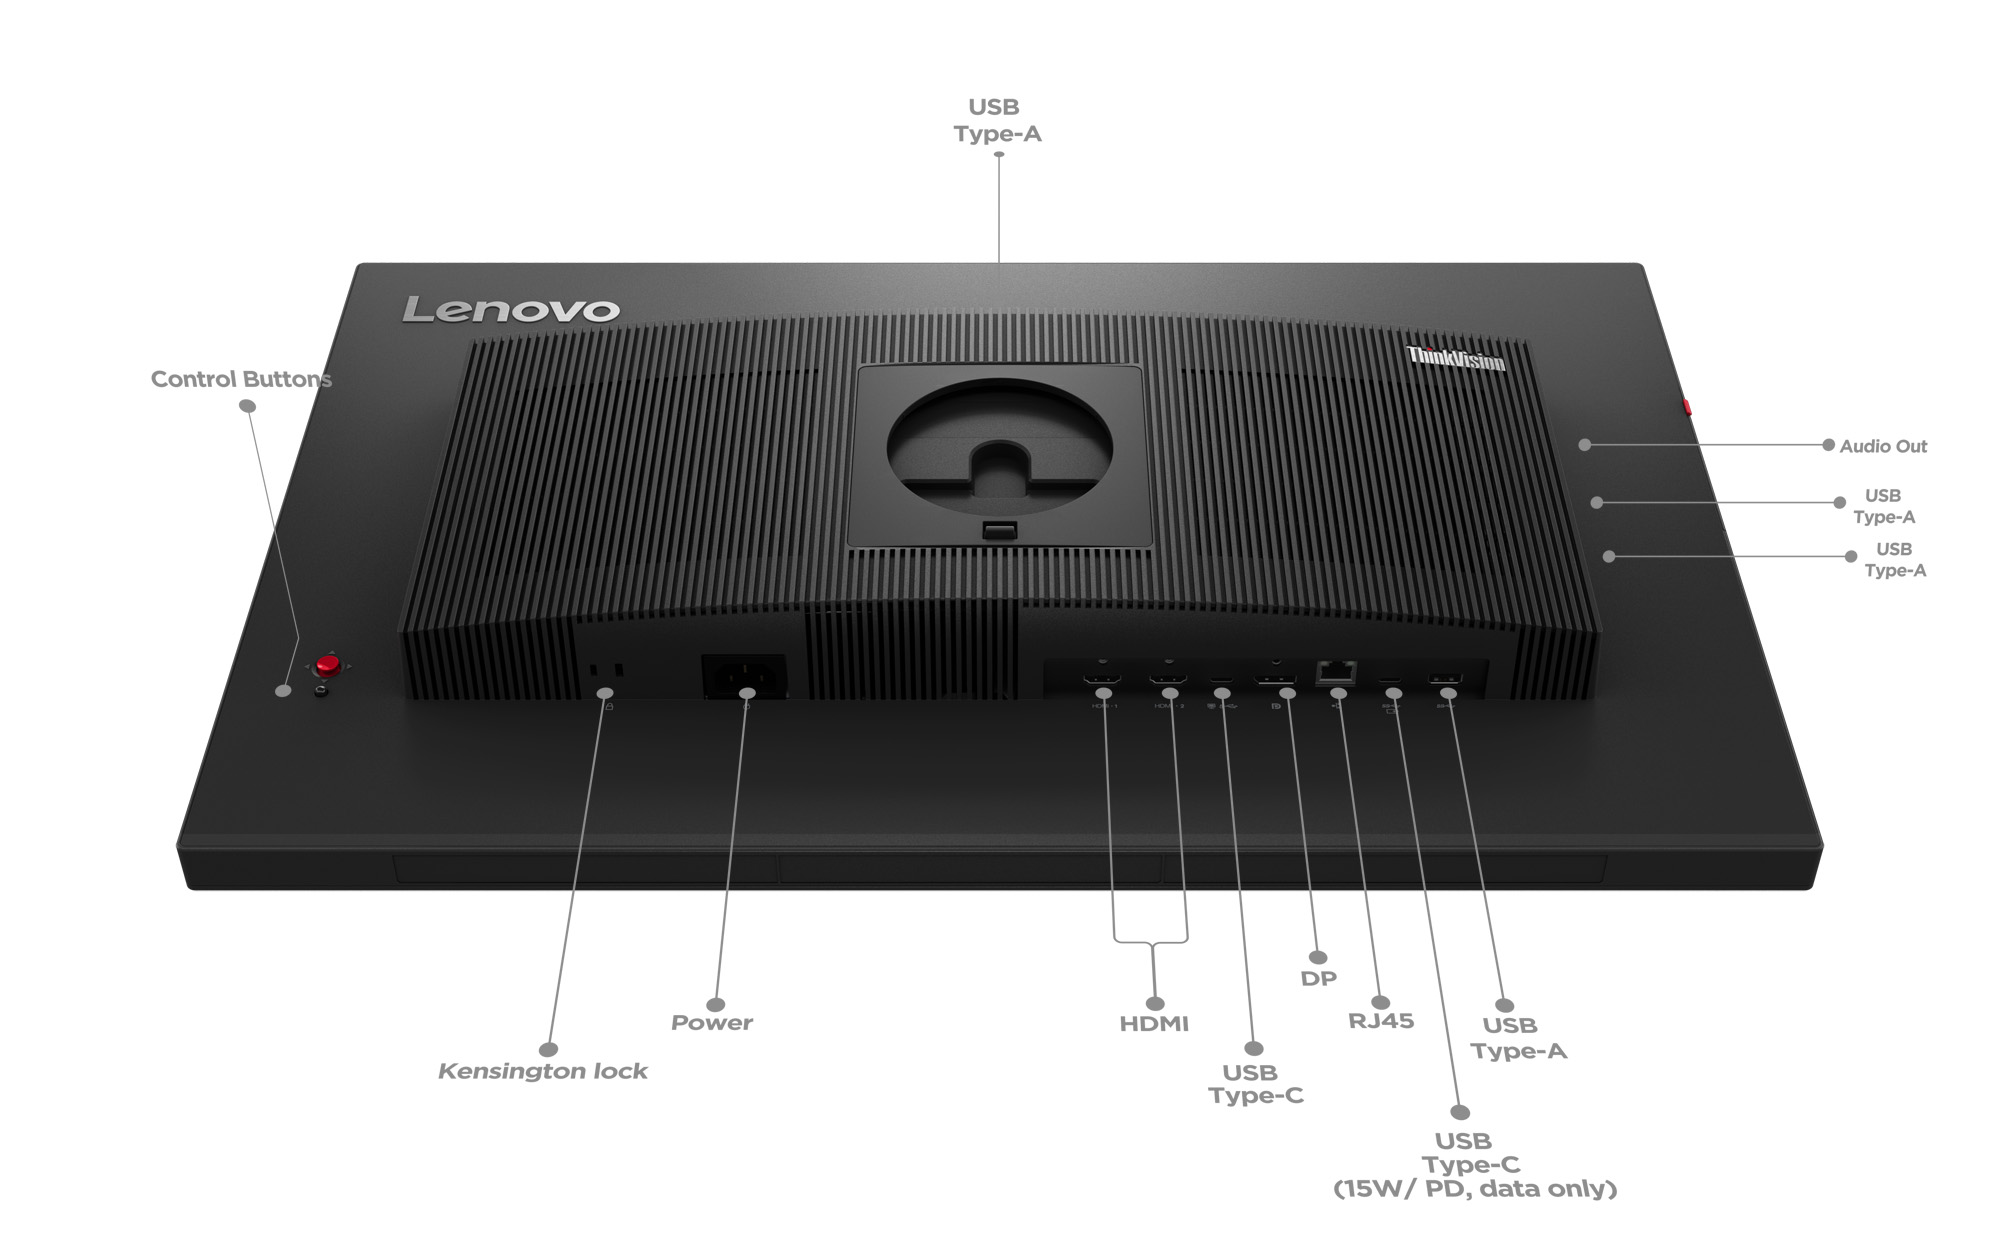 All the I/O ports on the Lenovo ThinkVision 27 3D monitor.